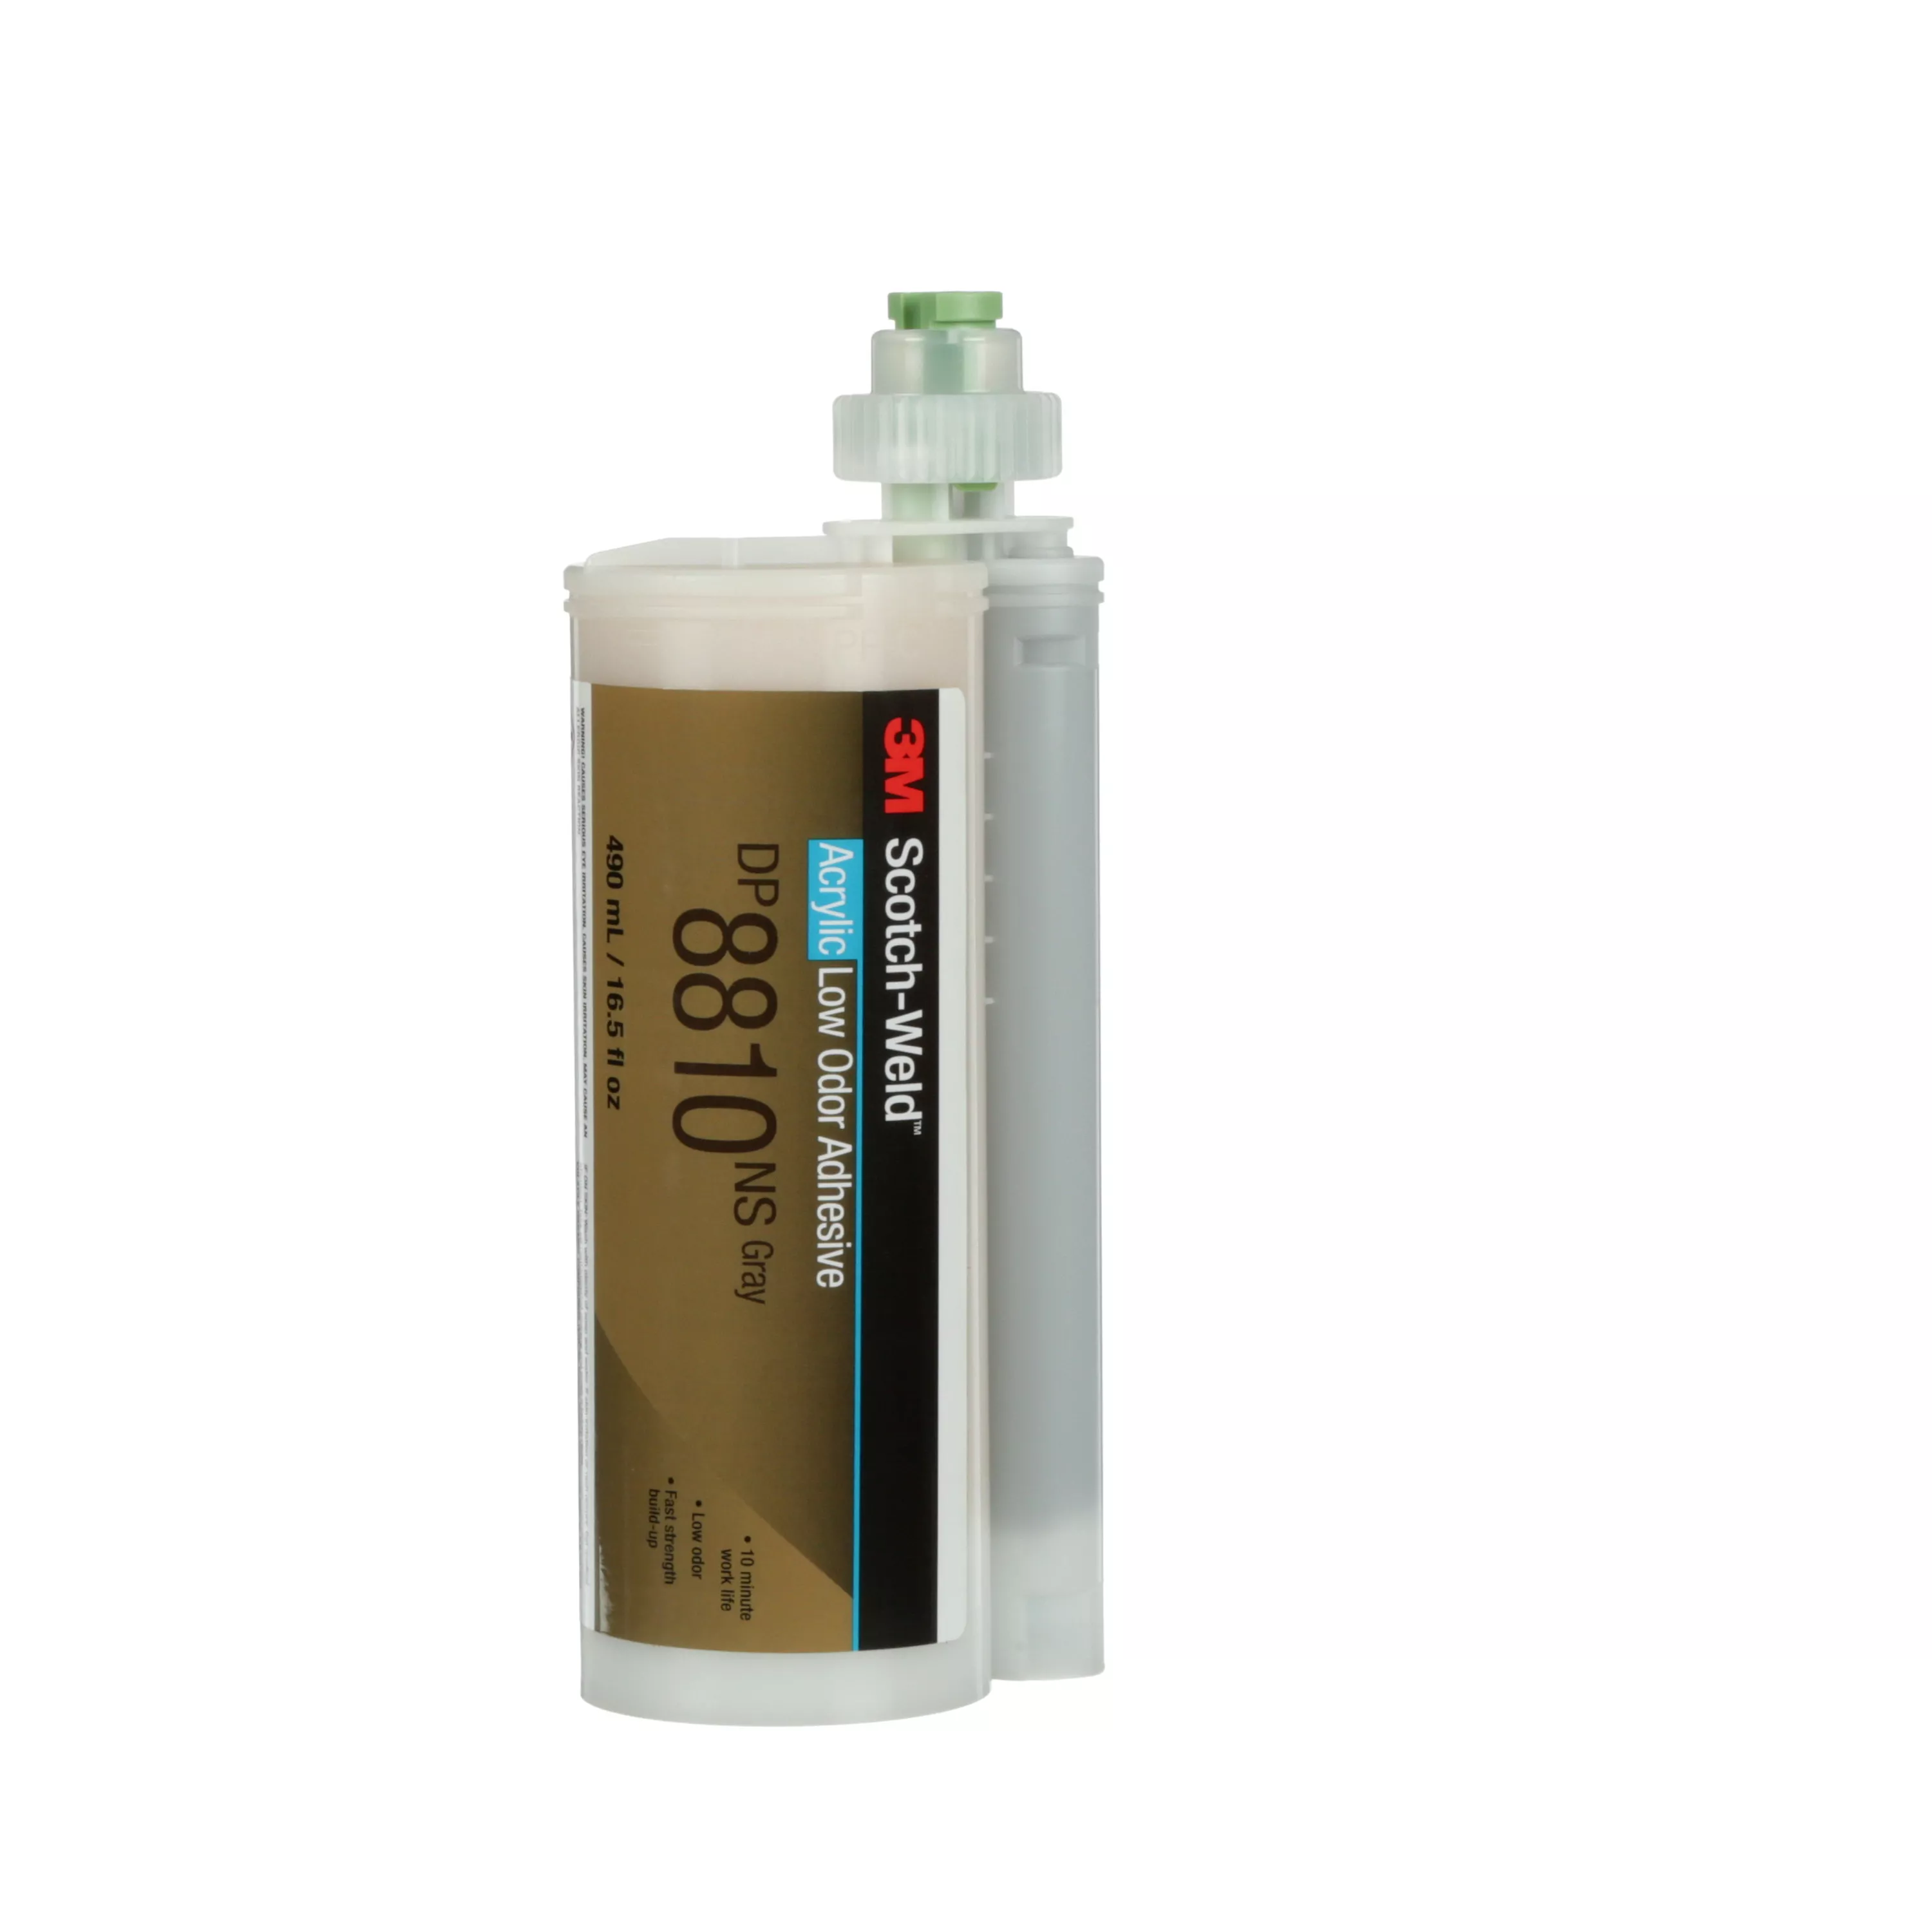 3M™ Scotch-Weld™ Low Odor Acrylic Adhesive DP8810NS, Gray, 490 mL
Duo-Pak, 6/Case